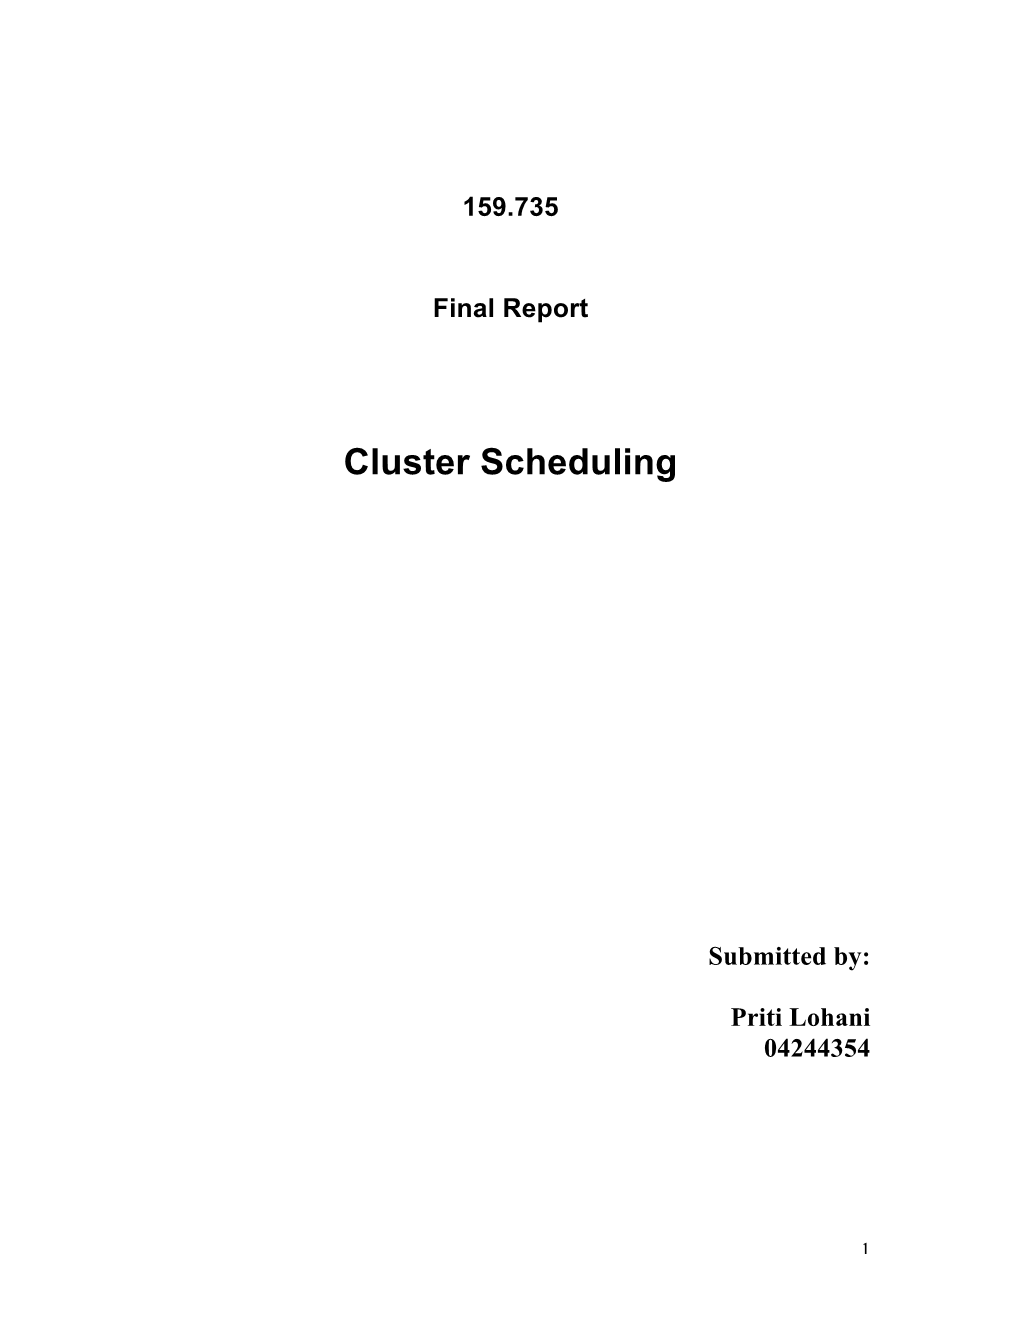 Cluster Scheduling